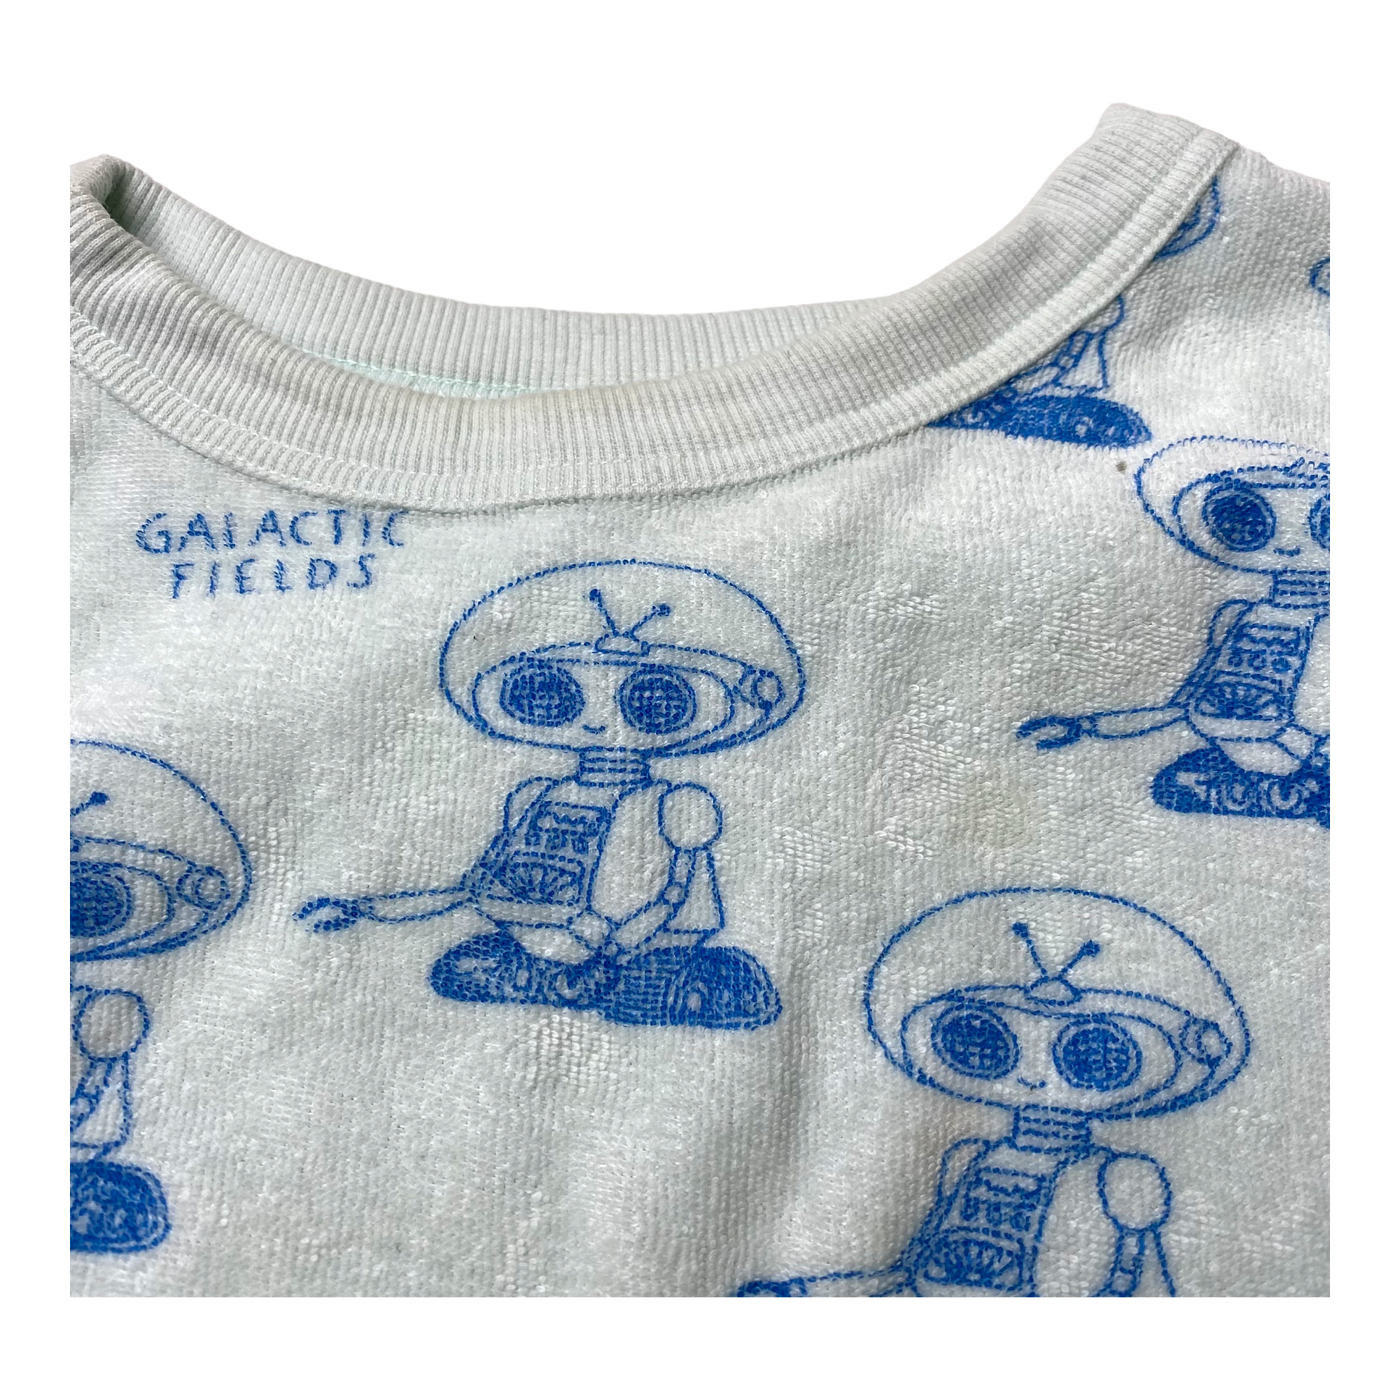 Mainio terry shirt, galactic fields | 98/104cm